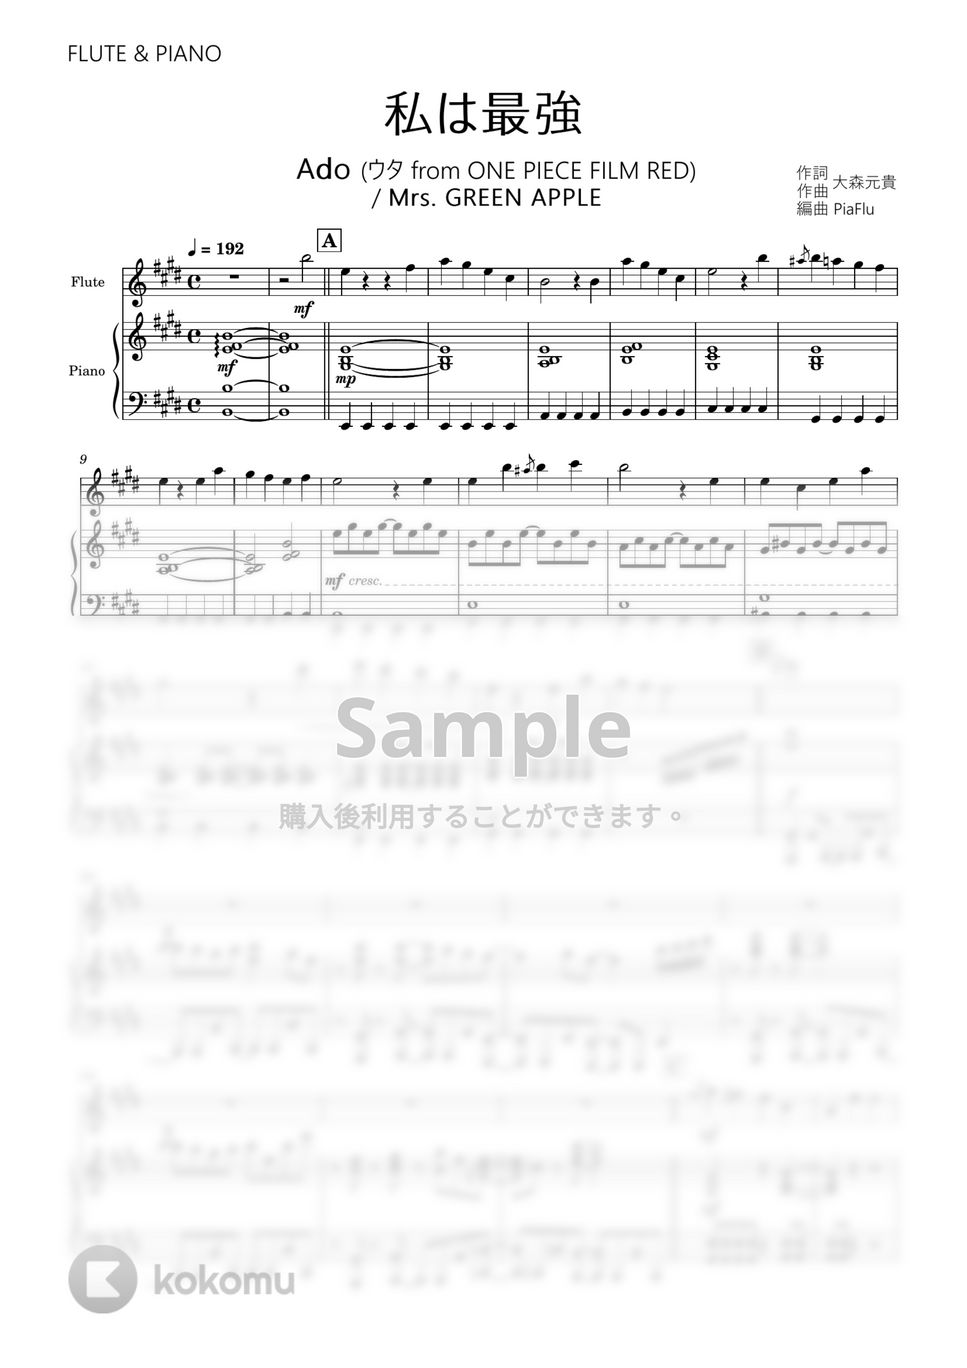 Ado - 私は最強 (フルート&ピアノ伴奏) by PiaFlu